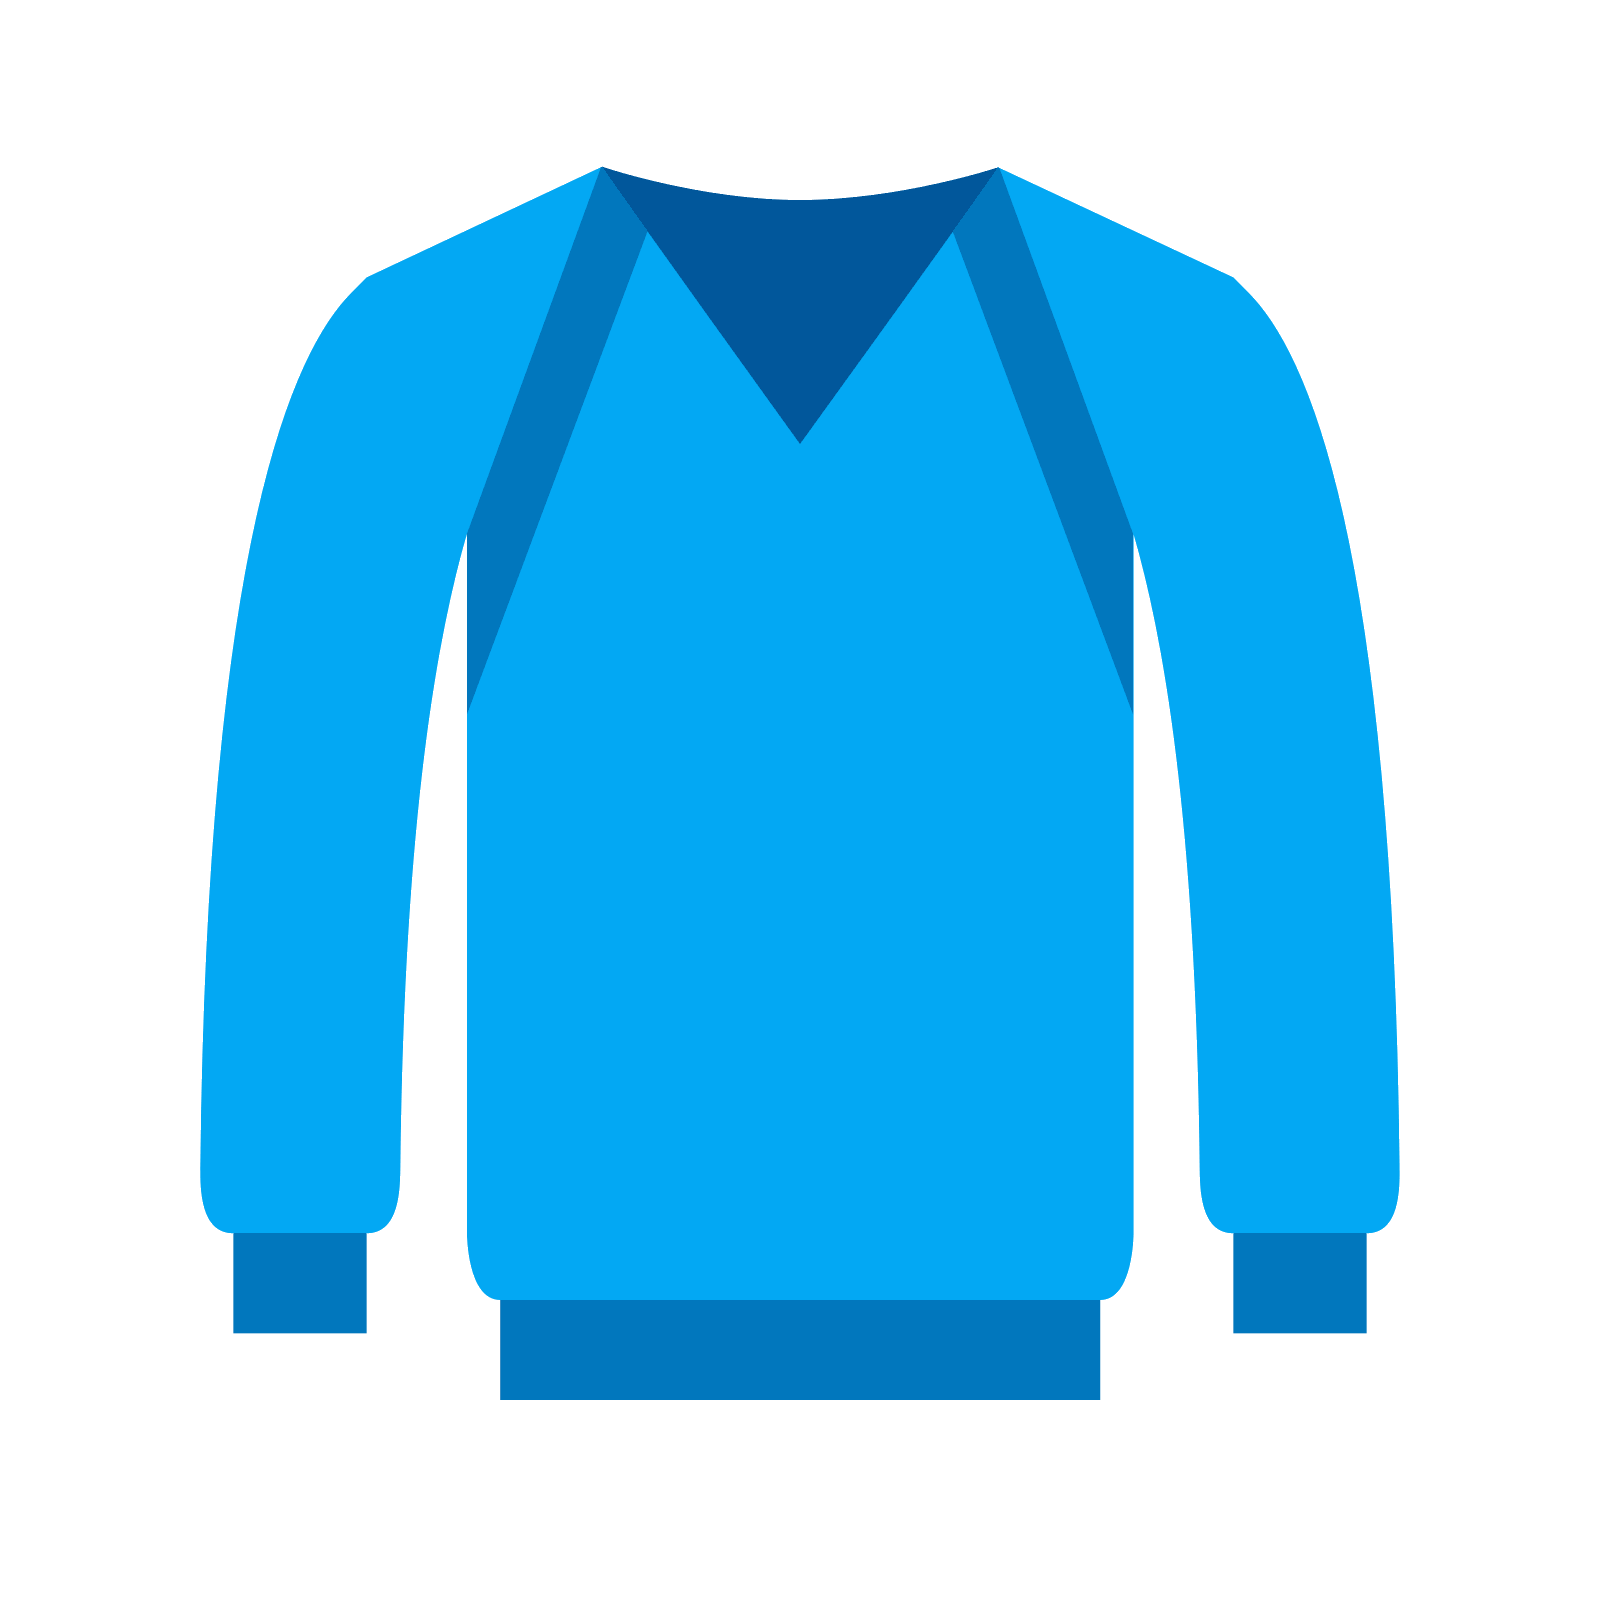 jacket clipart blue jumper